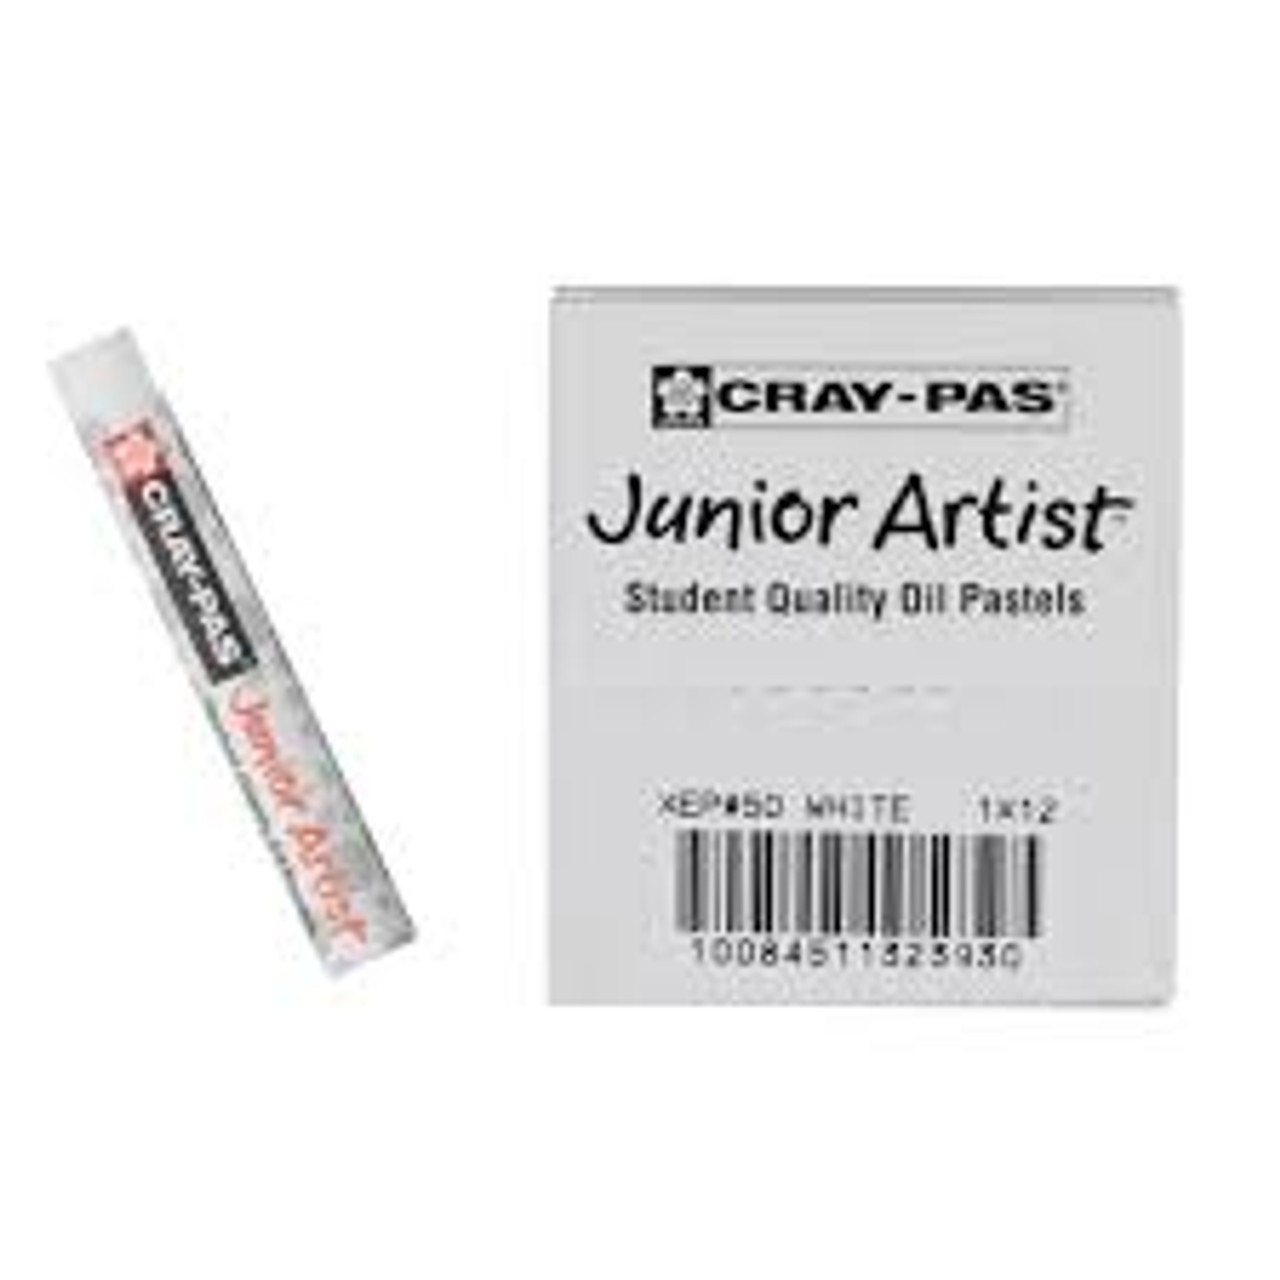 Cray-Pas Junior Artist Oil Pastels 12 packs